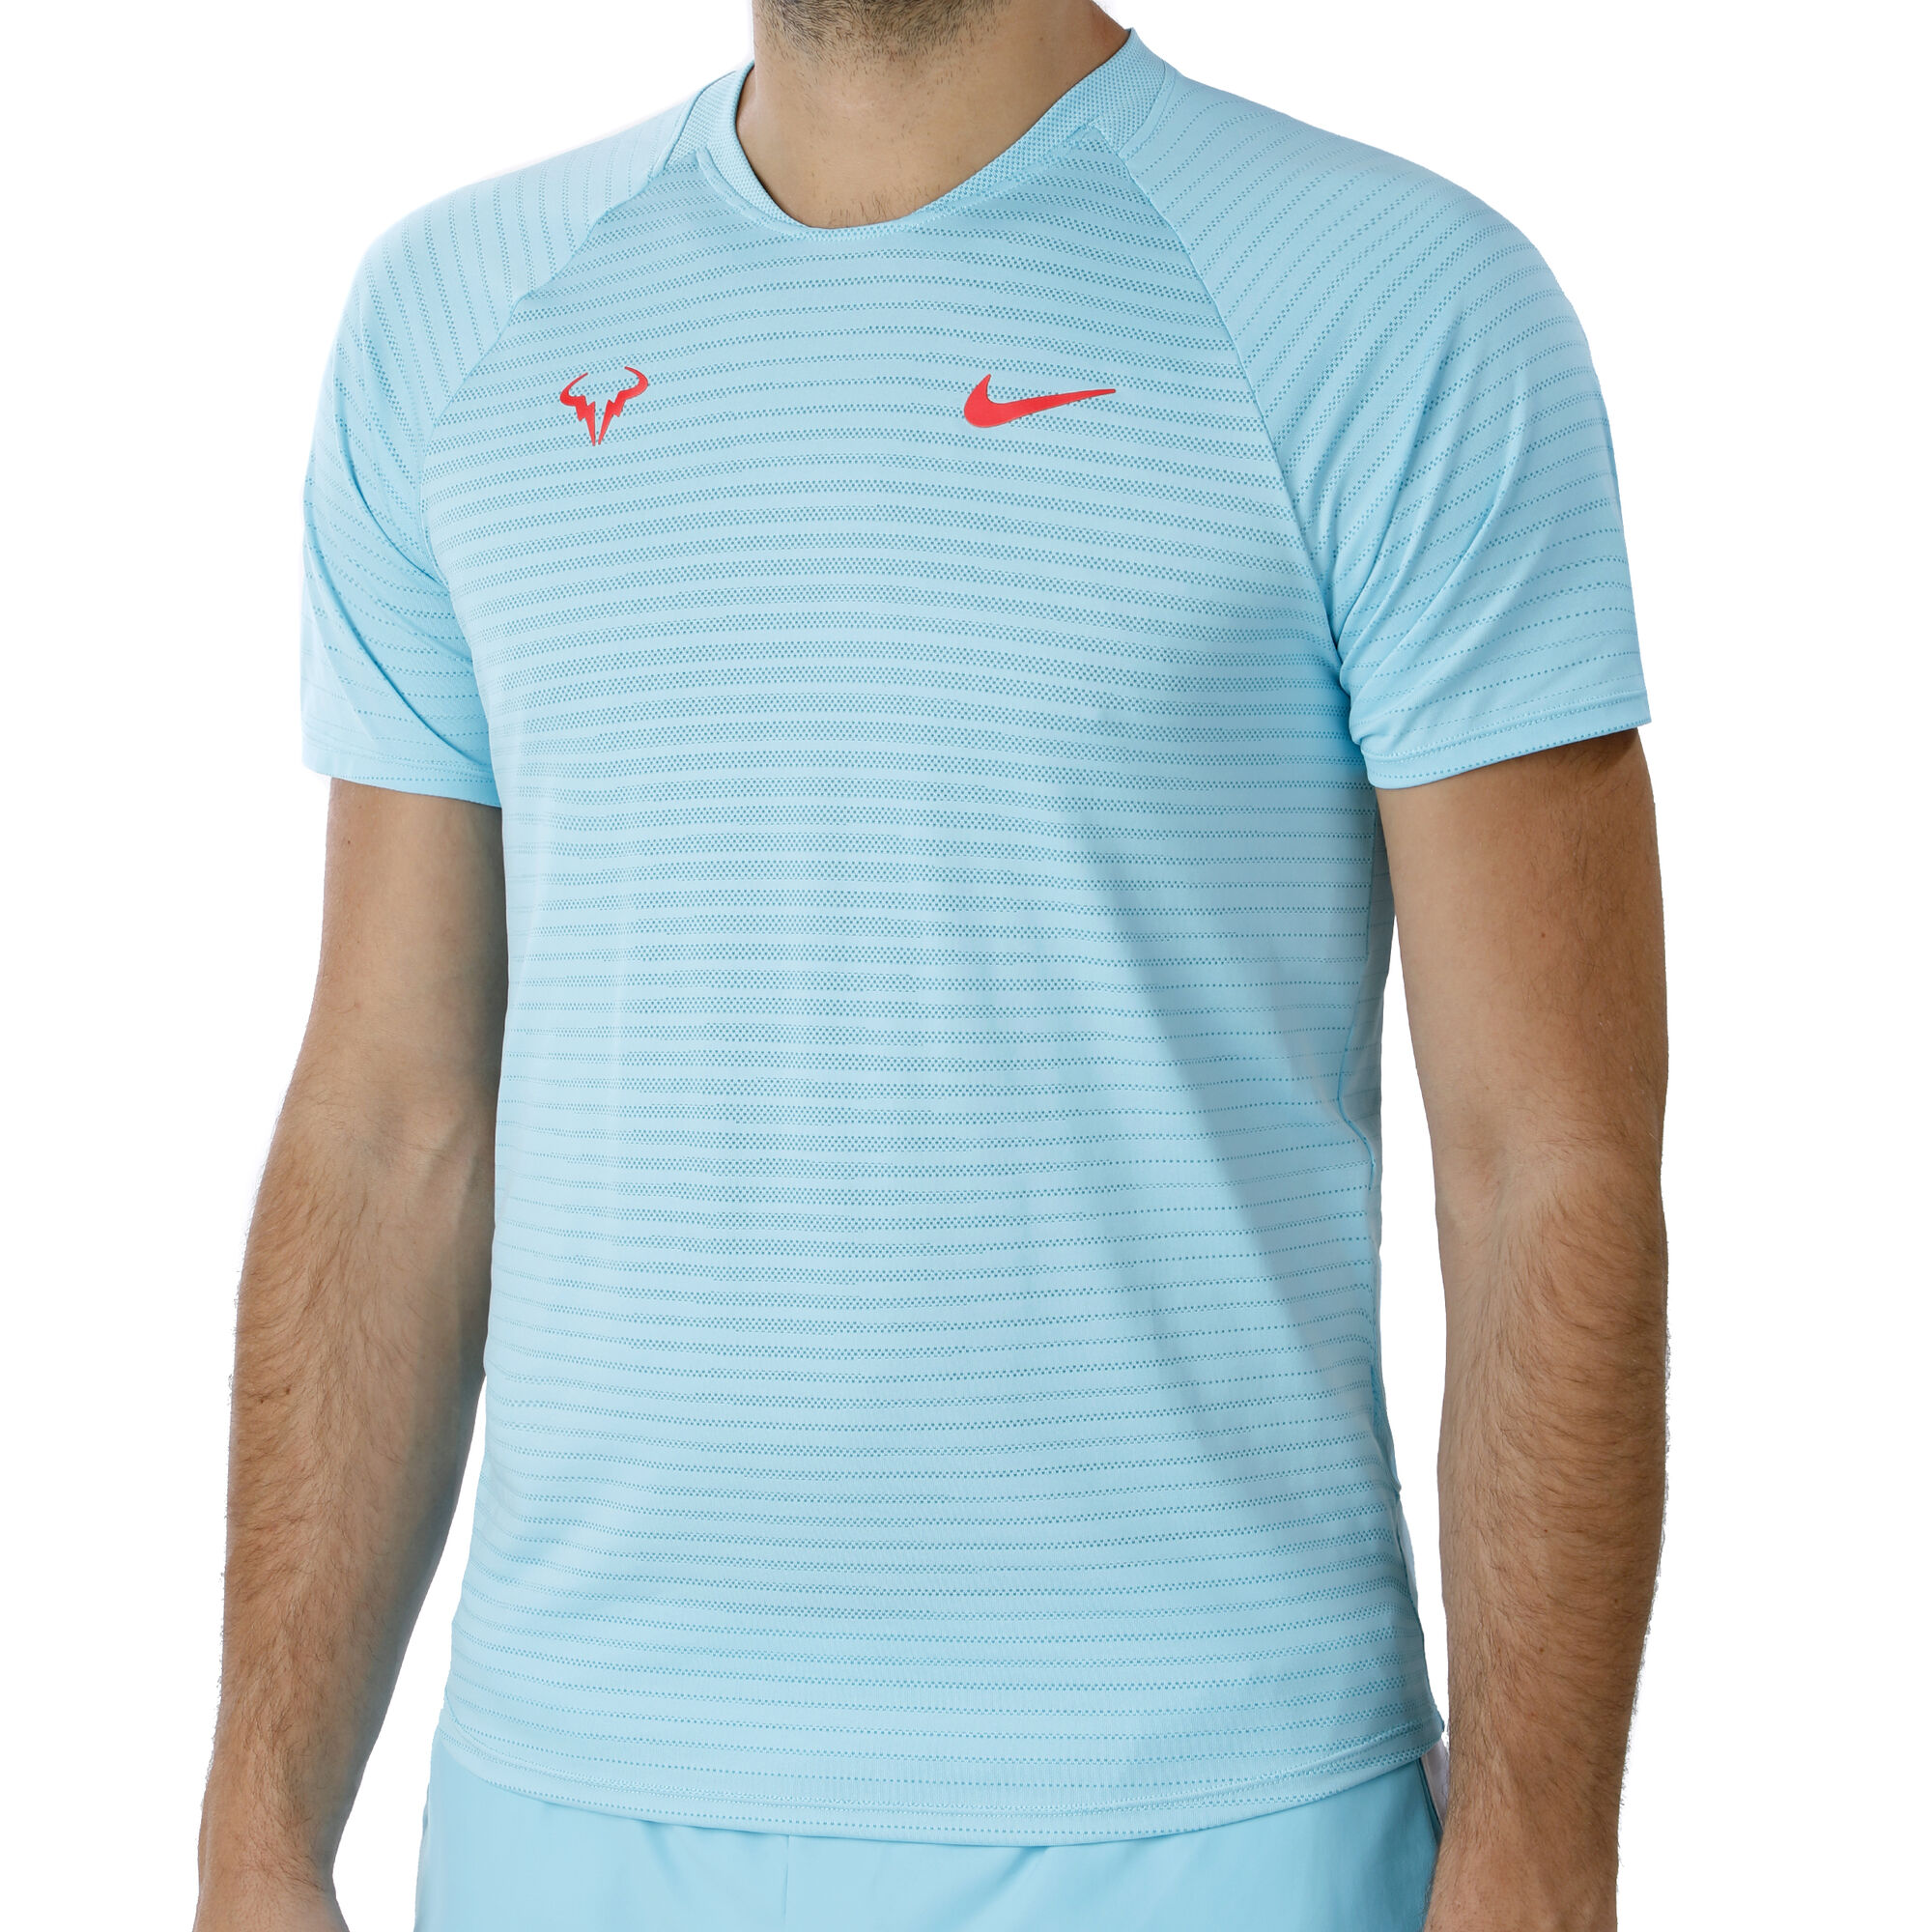 NikeCourt AeroReact Rafa Men's Sleeveless Tennis Top CN9643